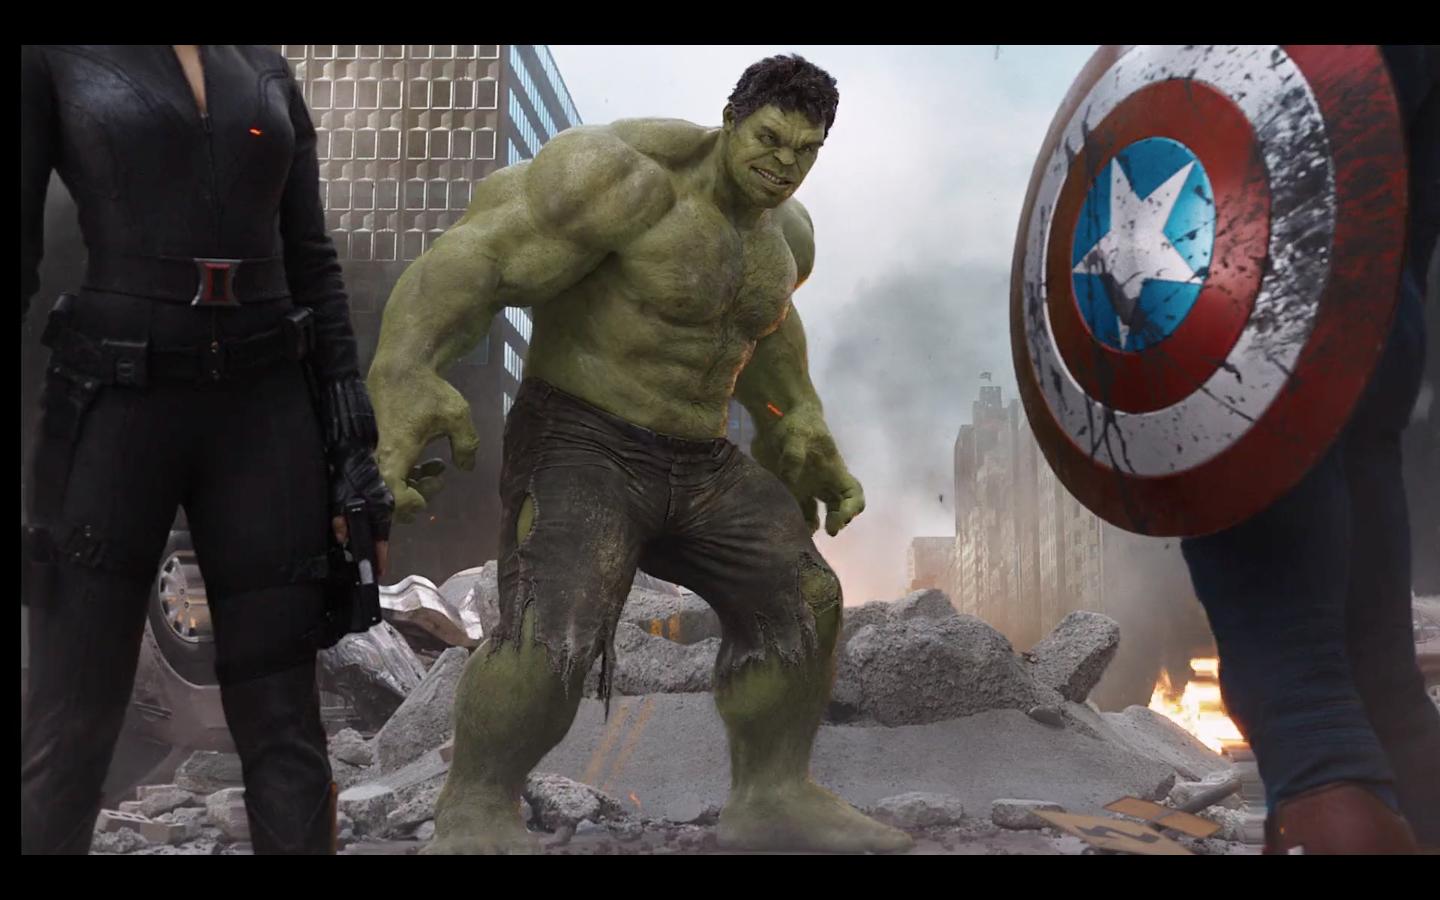 The Hulk Avengers Wallpaper Wide HD